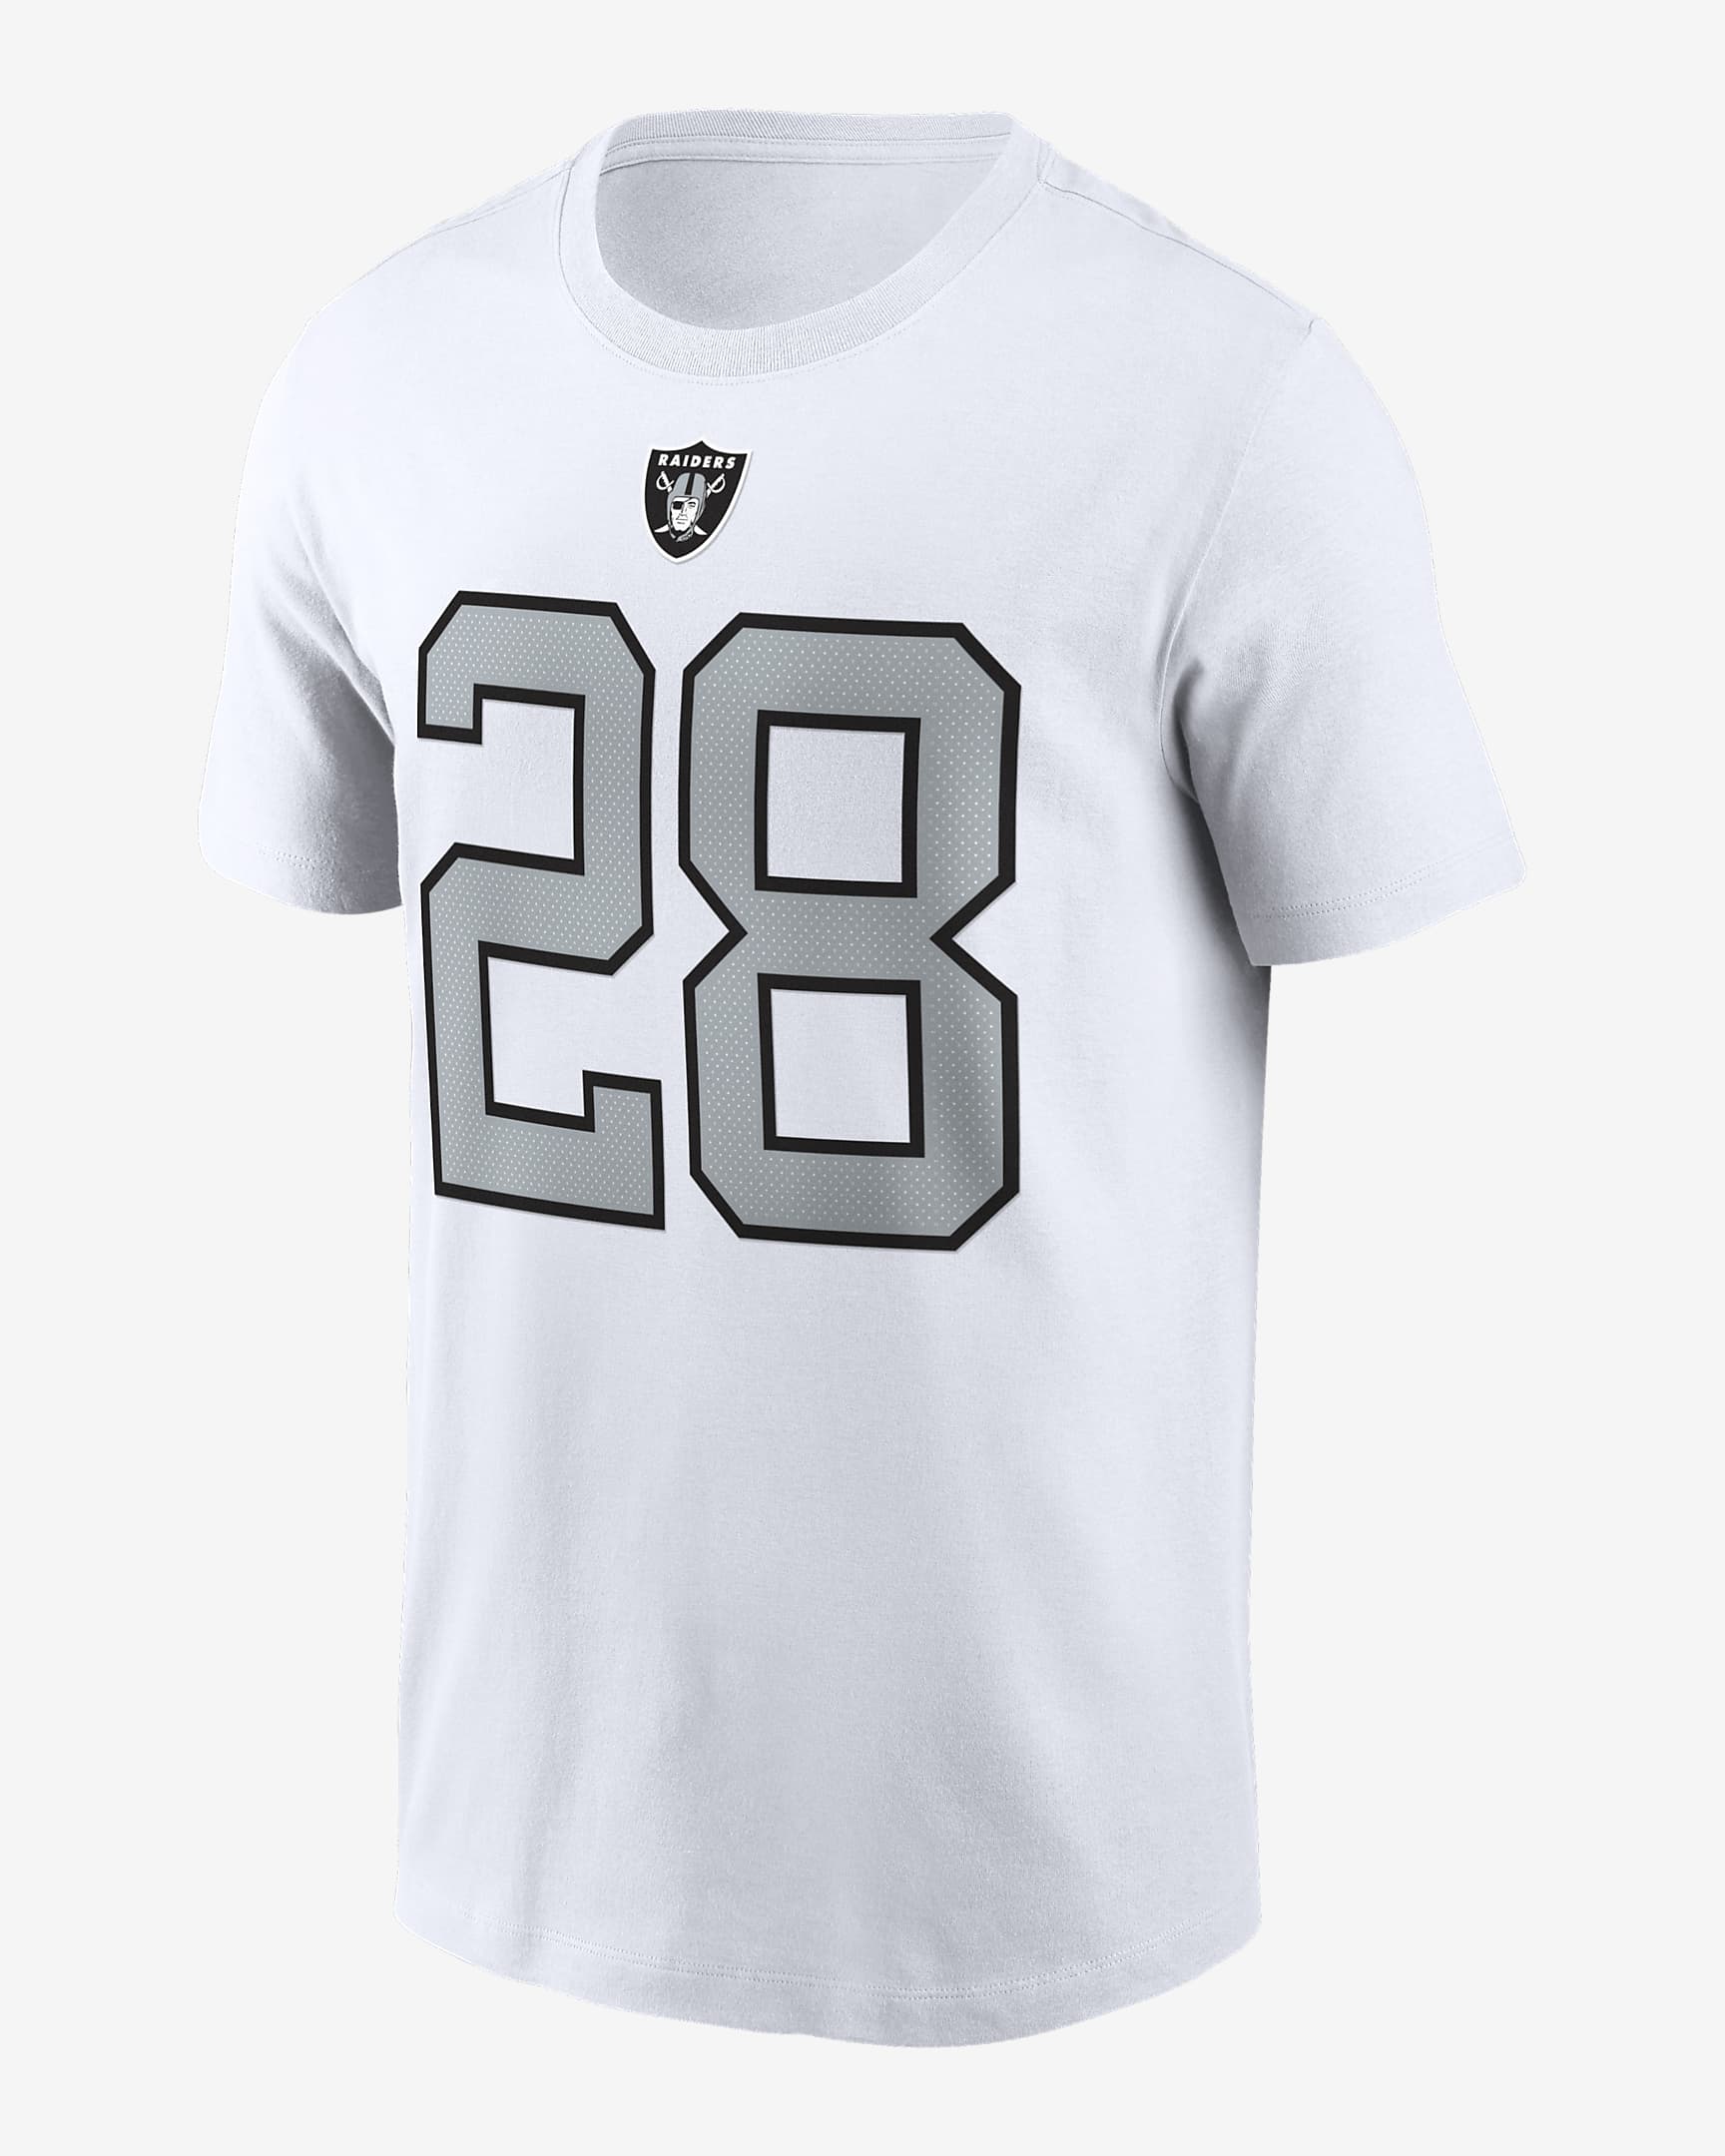 NFL Las Vegas Raiders (Josh Jacobs) Men's T-Shirt. Nike.com